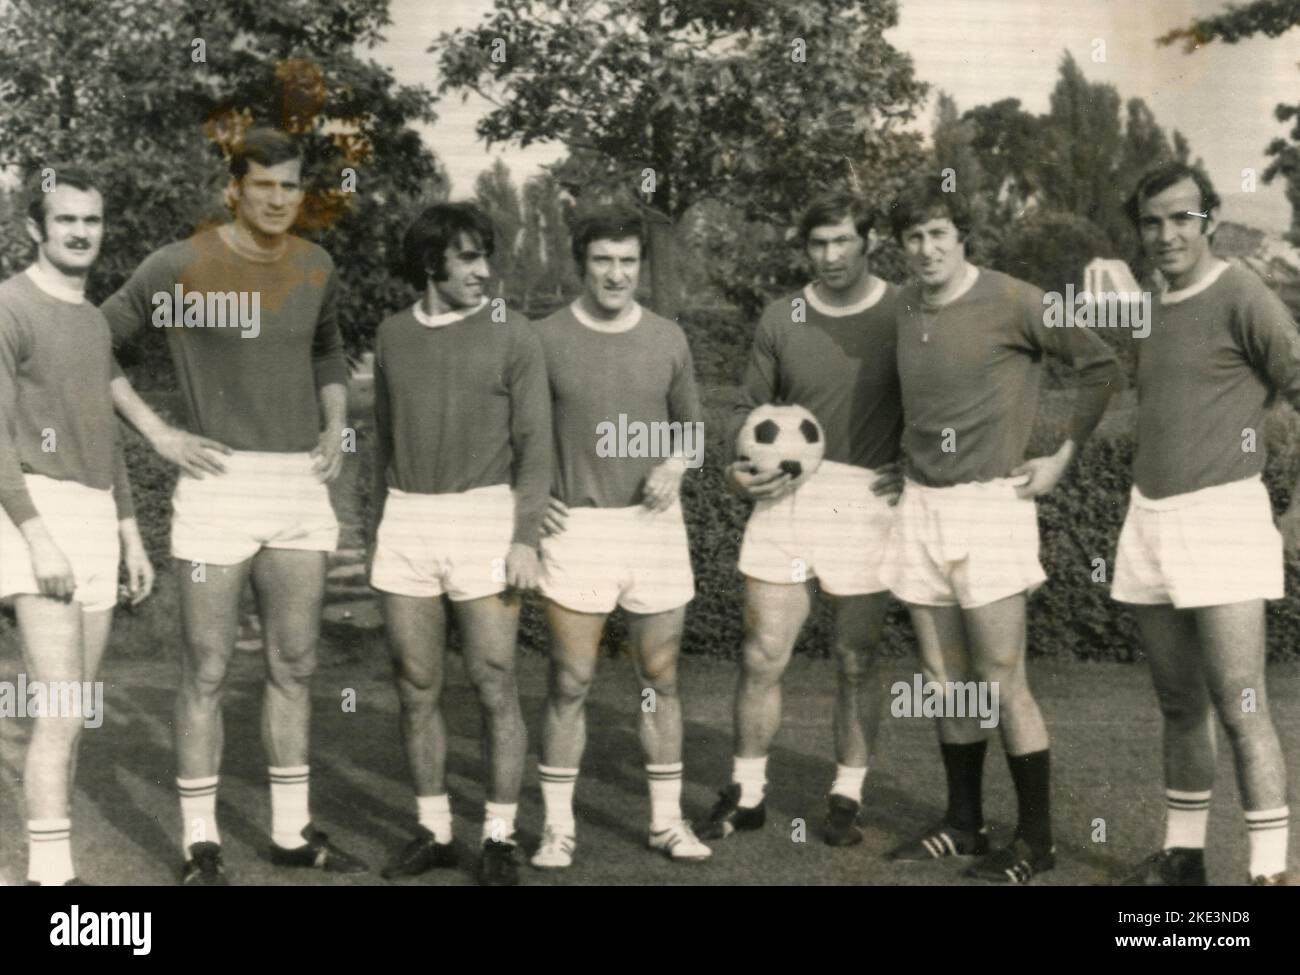 Italian football players from left: Mazzola, Facchetti, Anastasi, Bedin, Burgnich, Rosato and Corso before training, Coverciano, Italy 1970s Stock Photo